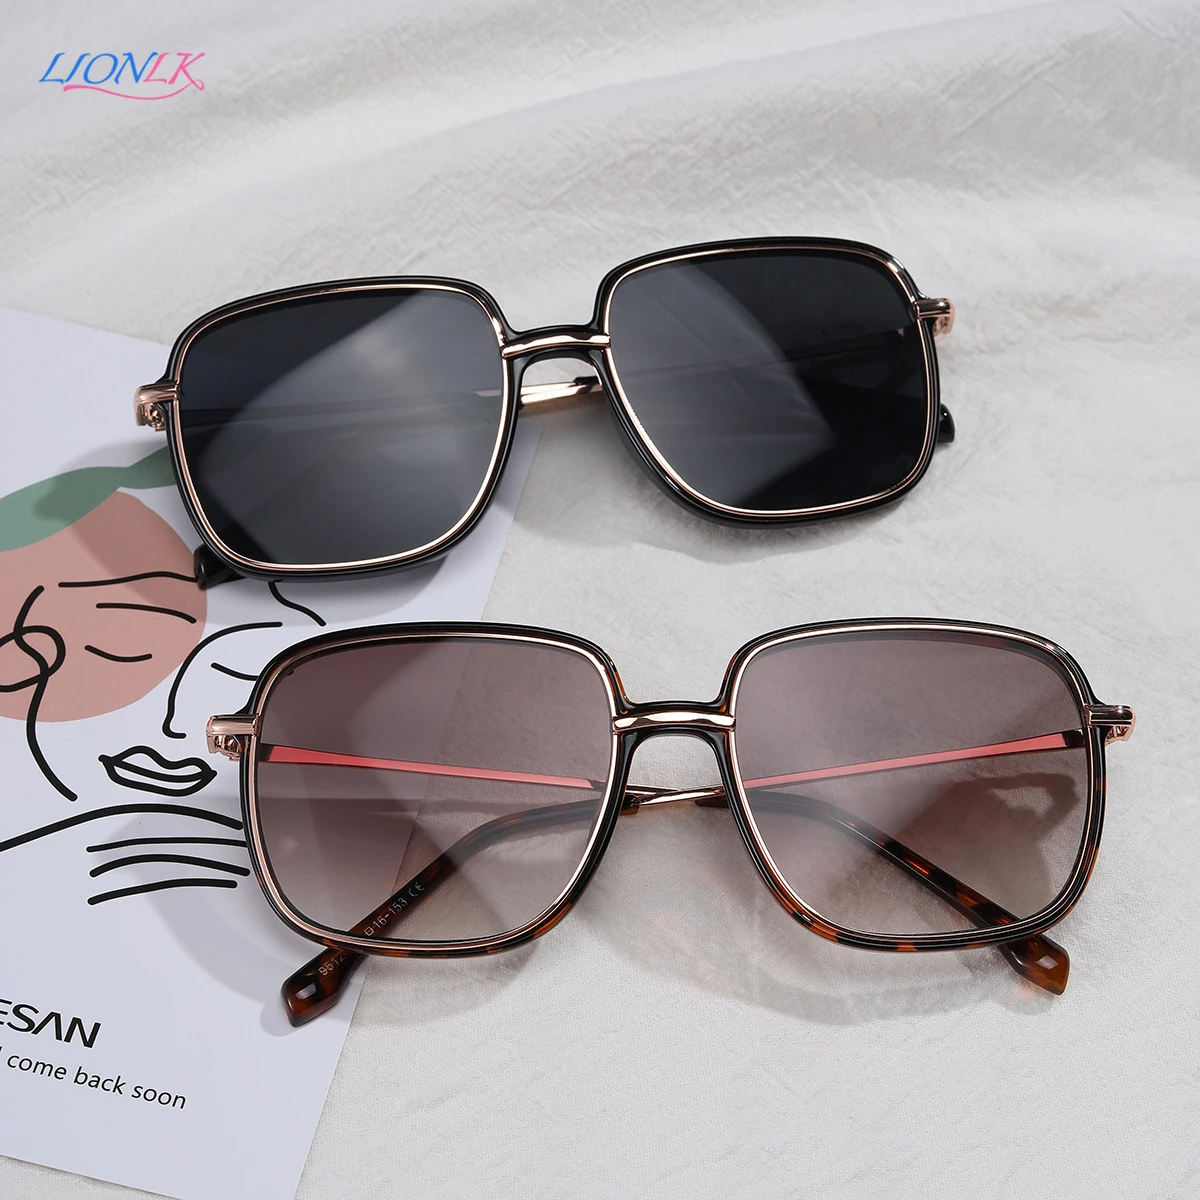 

LIONLK Fashion Women's Sunglasses Brand Square Oversized Frame Anti-Glare UV400 Luxury Designer Sun Glasses NEW 2021 Pink Black